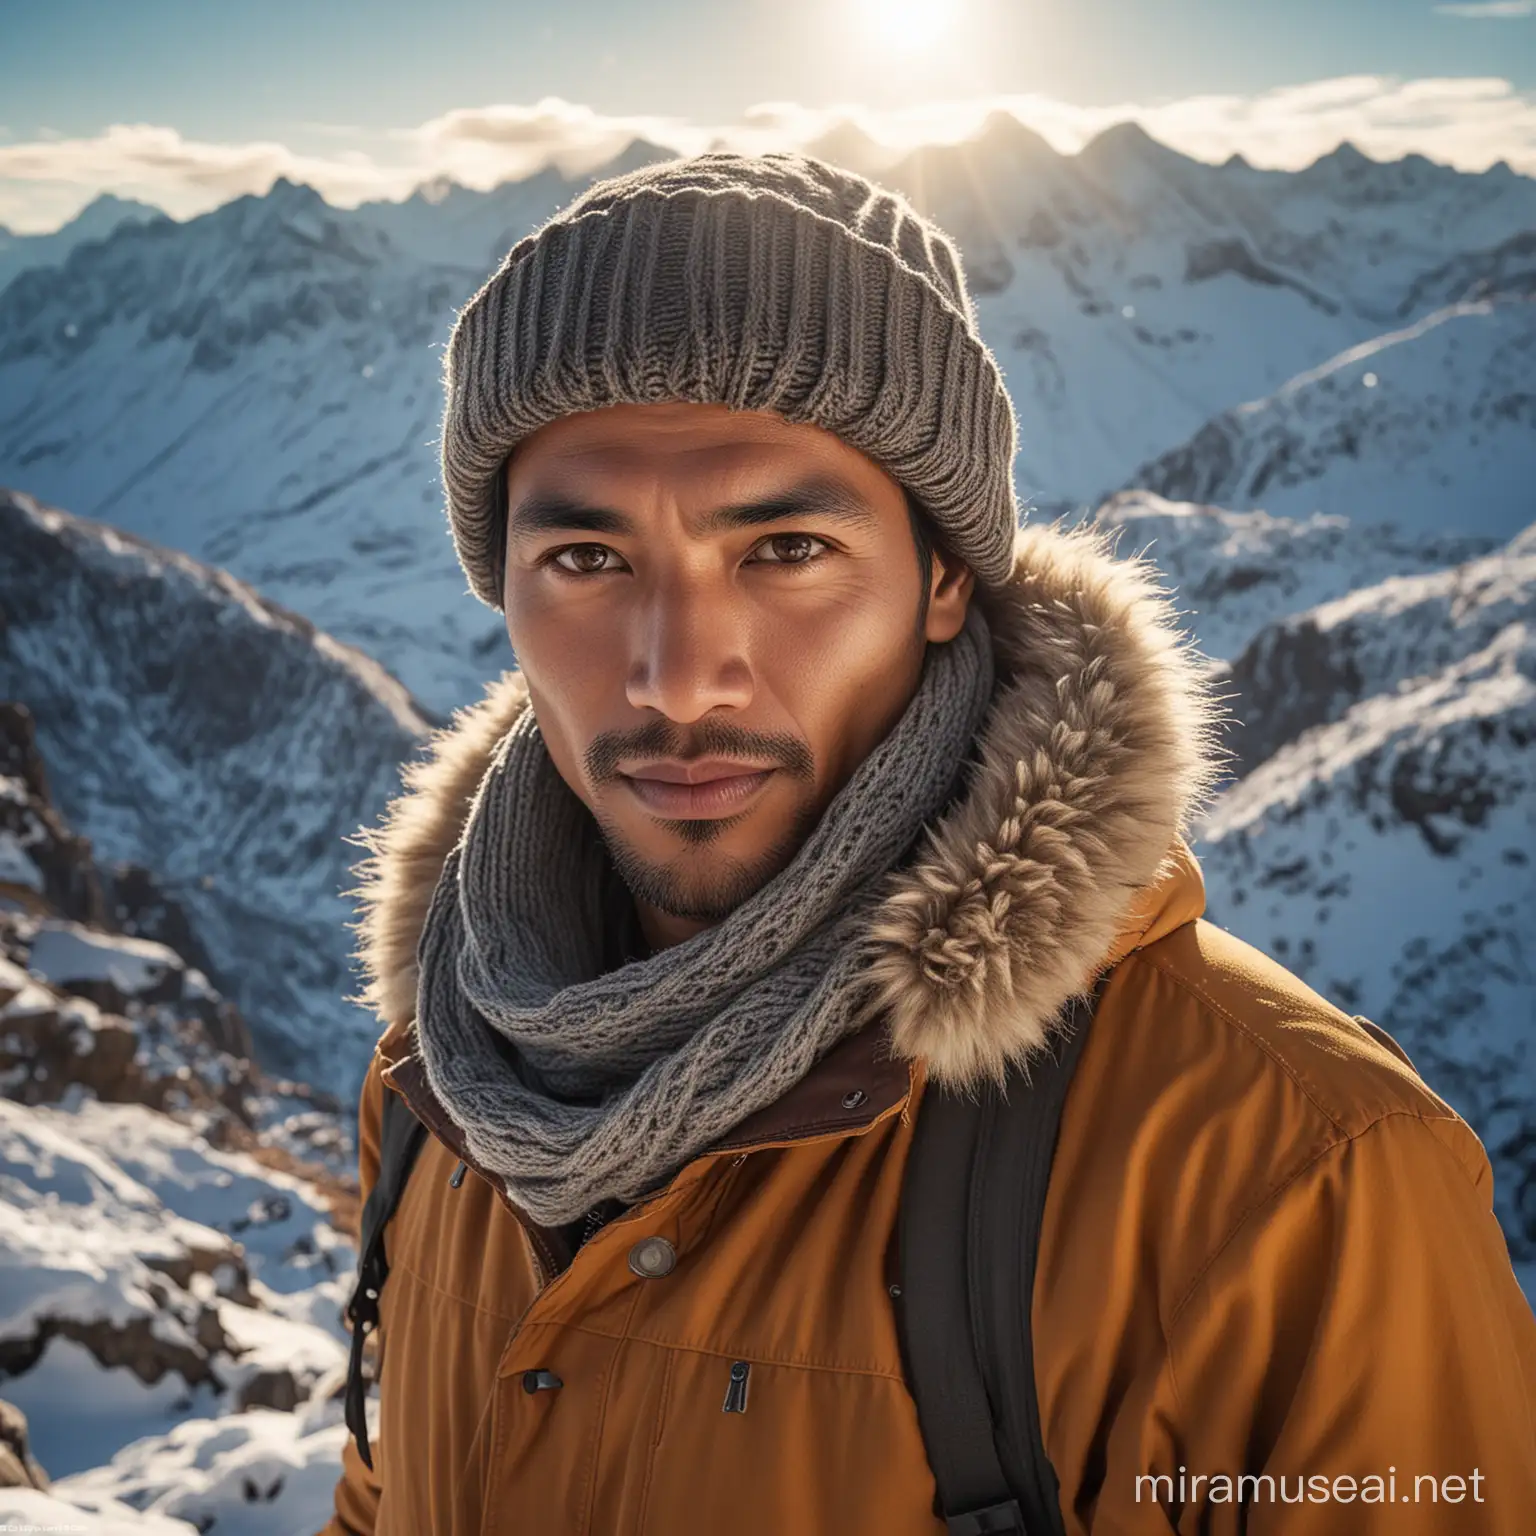 Handsome Indonesian Man on Snowy Mountain Serene Portrait in 8K UHD RAW